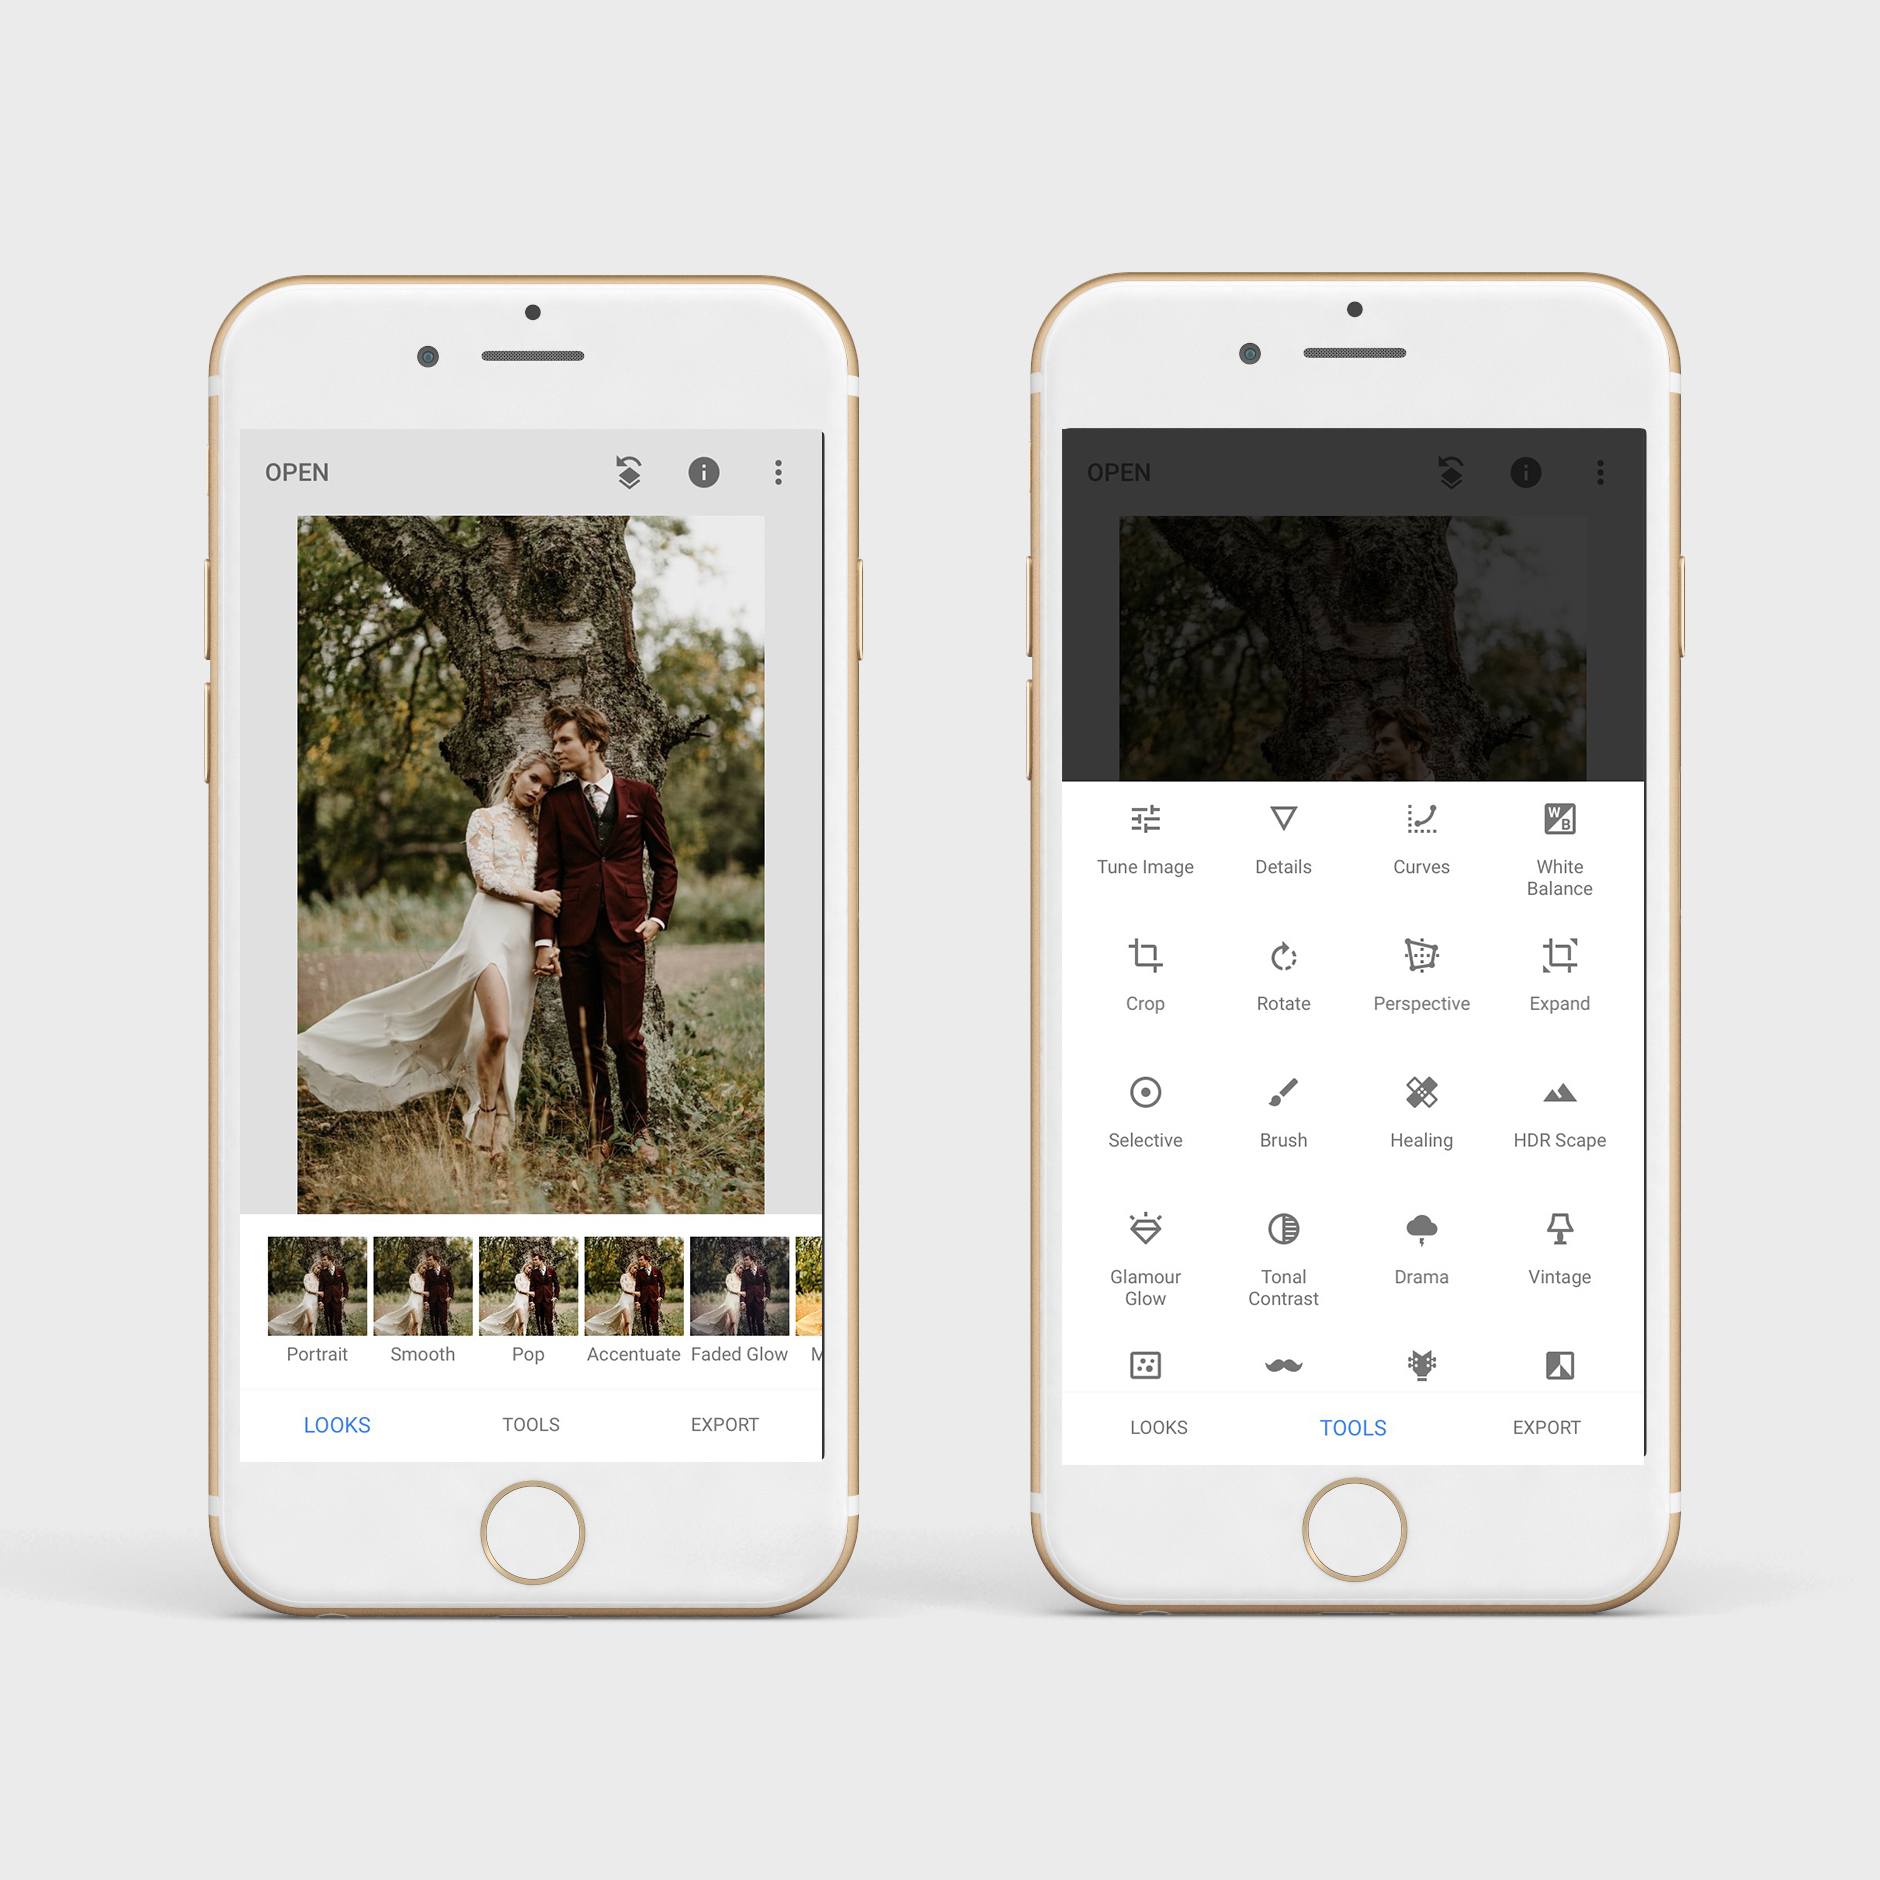 enhance phone photos with Snapseed